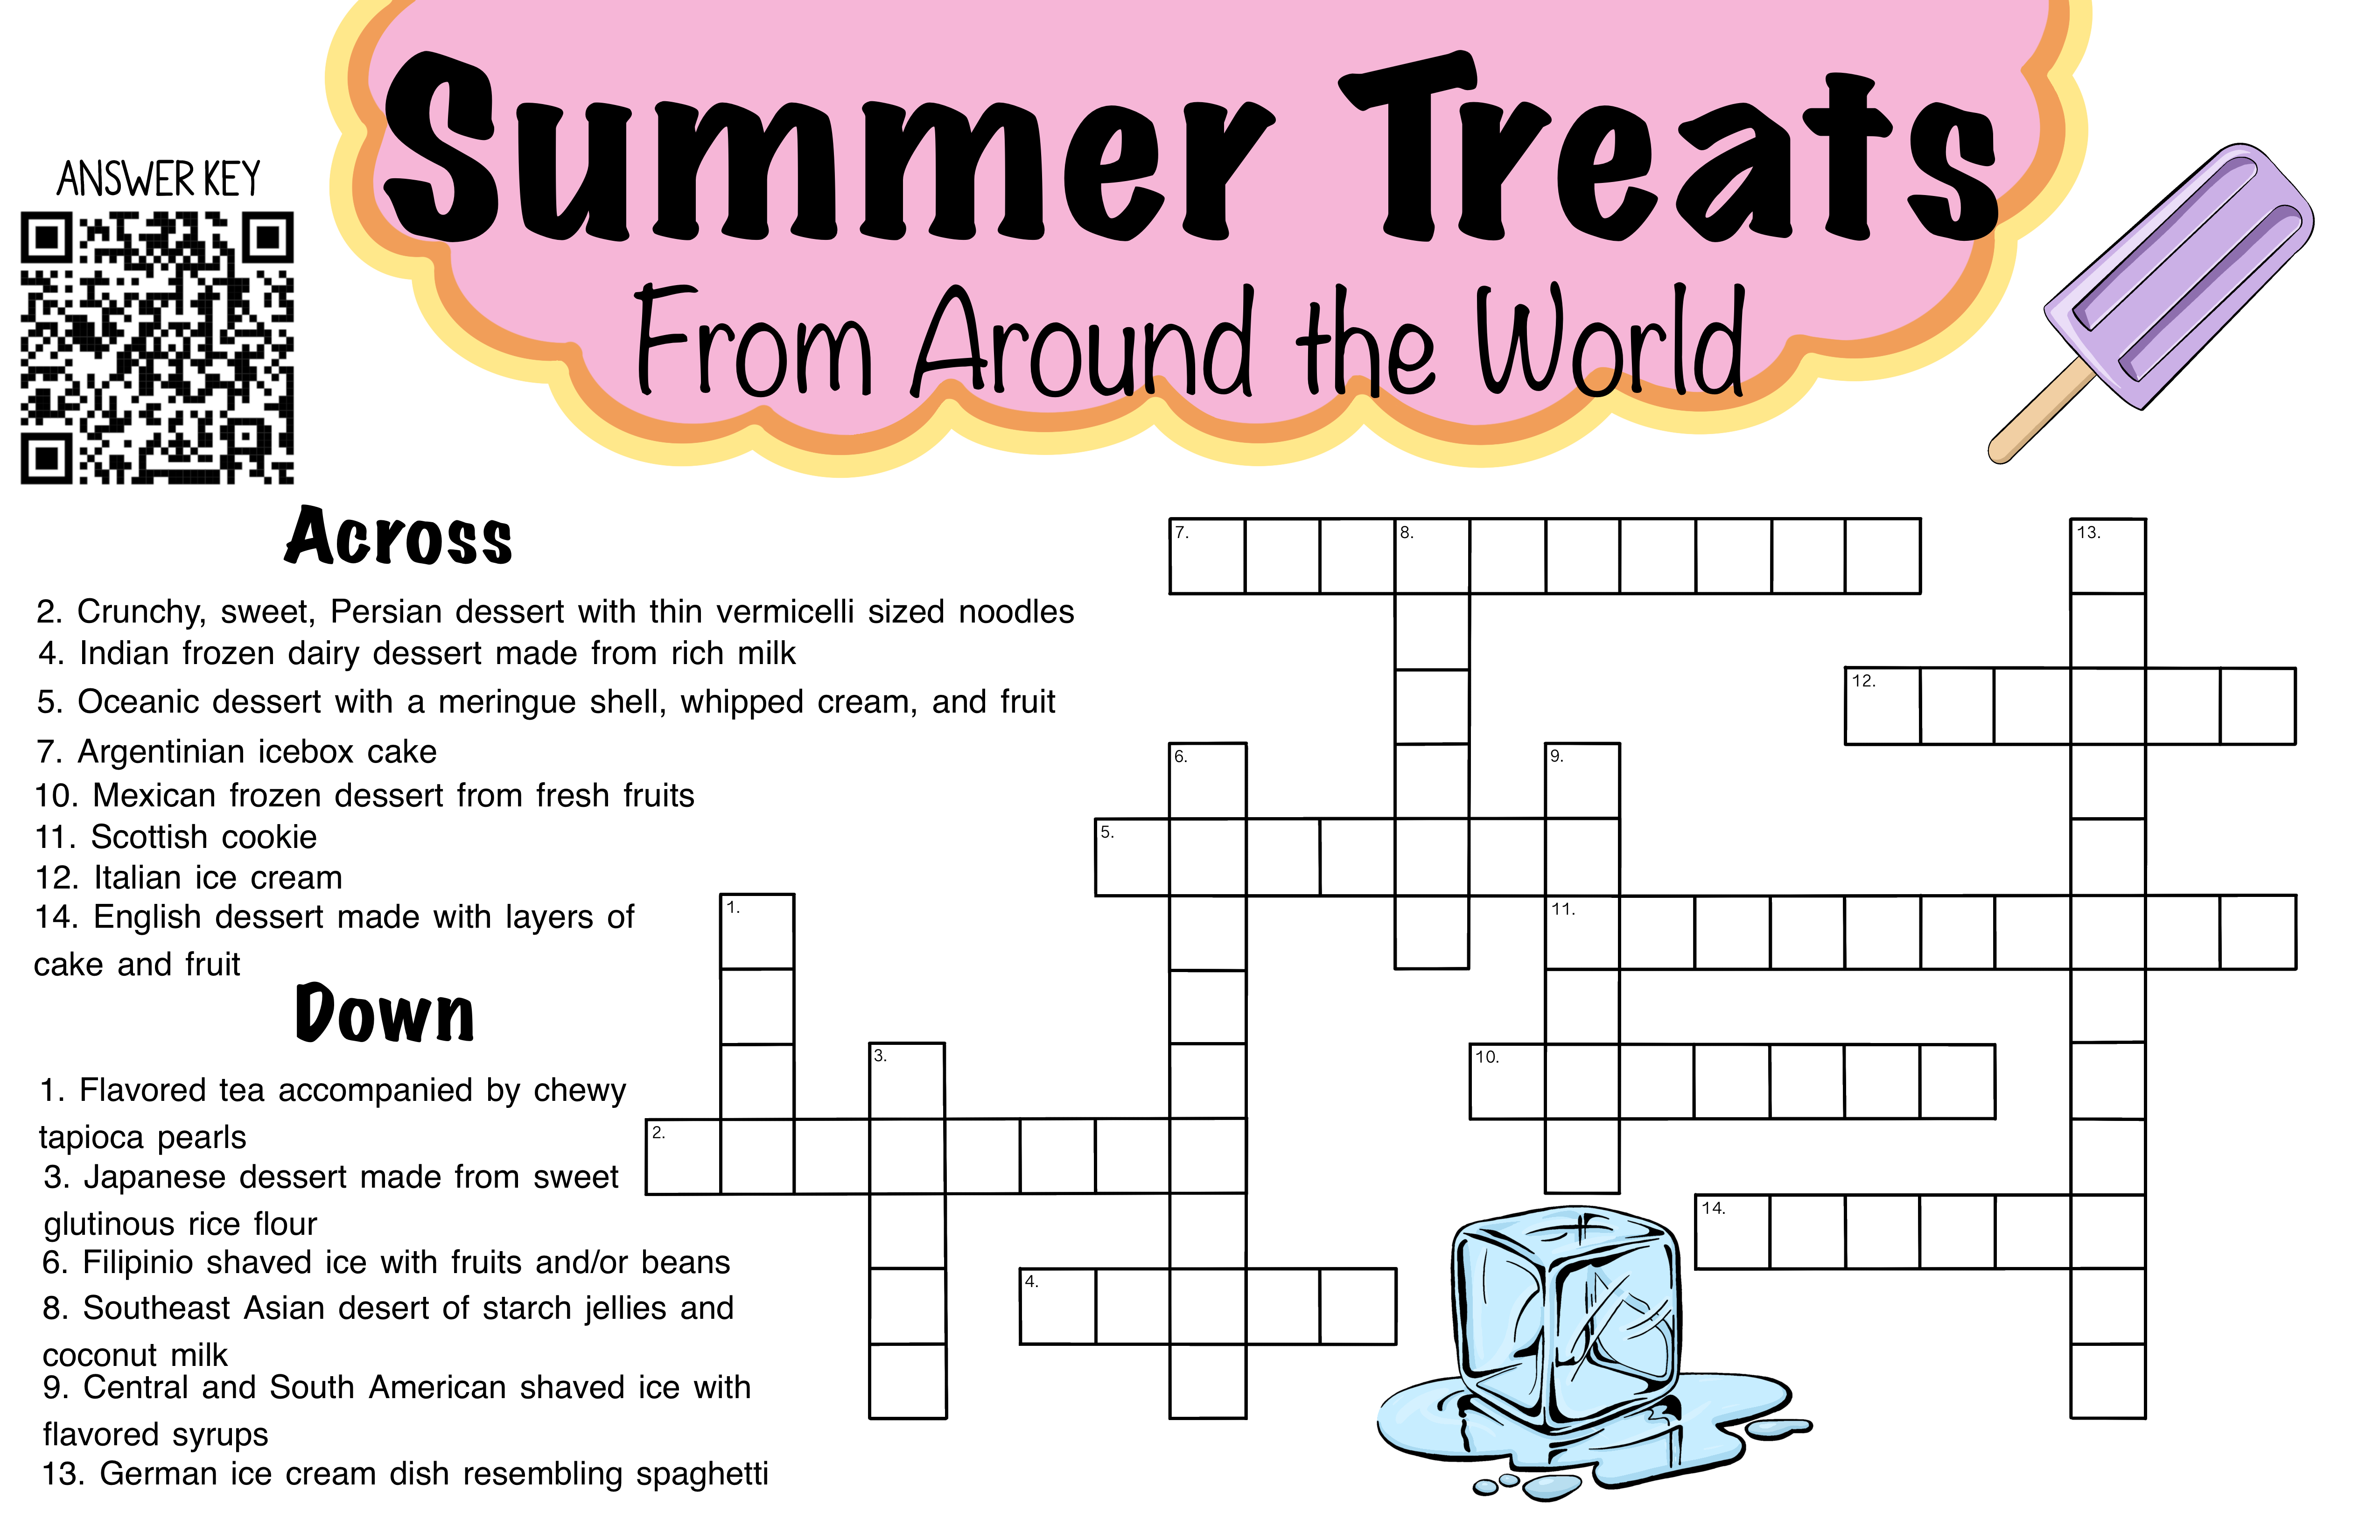 Summer Treats From Around the World Crossword